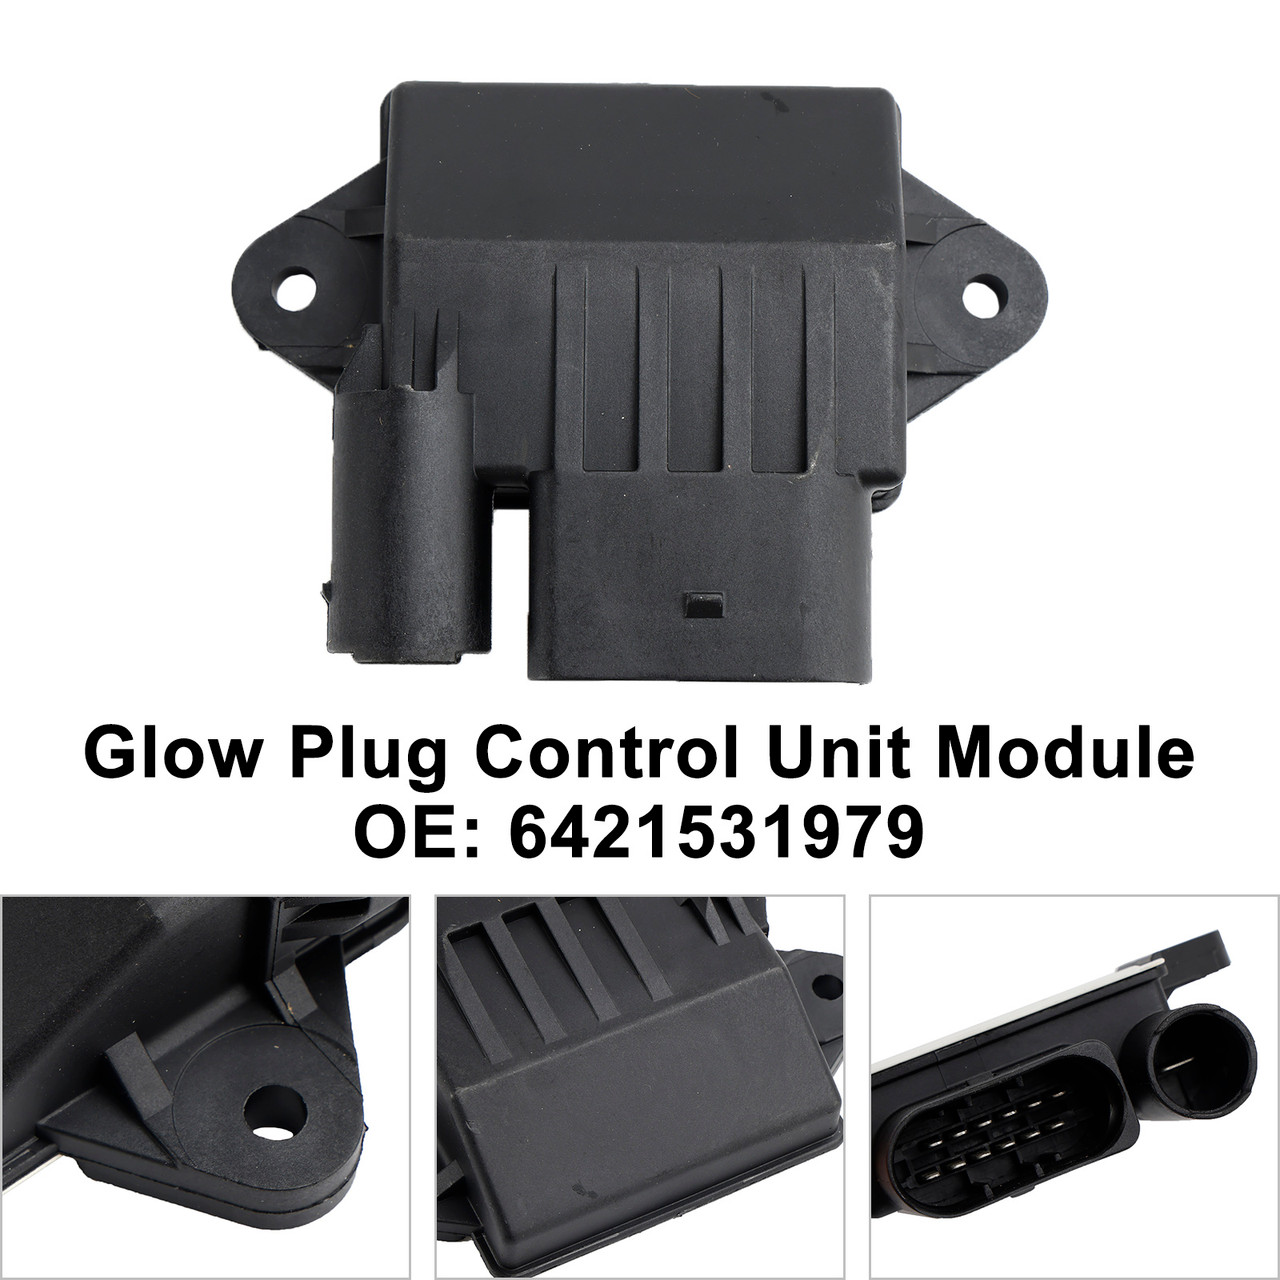 Glow Plug Control Unit Module for Mercedes E-Class AWD/RWD S211 W211 6421531979